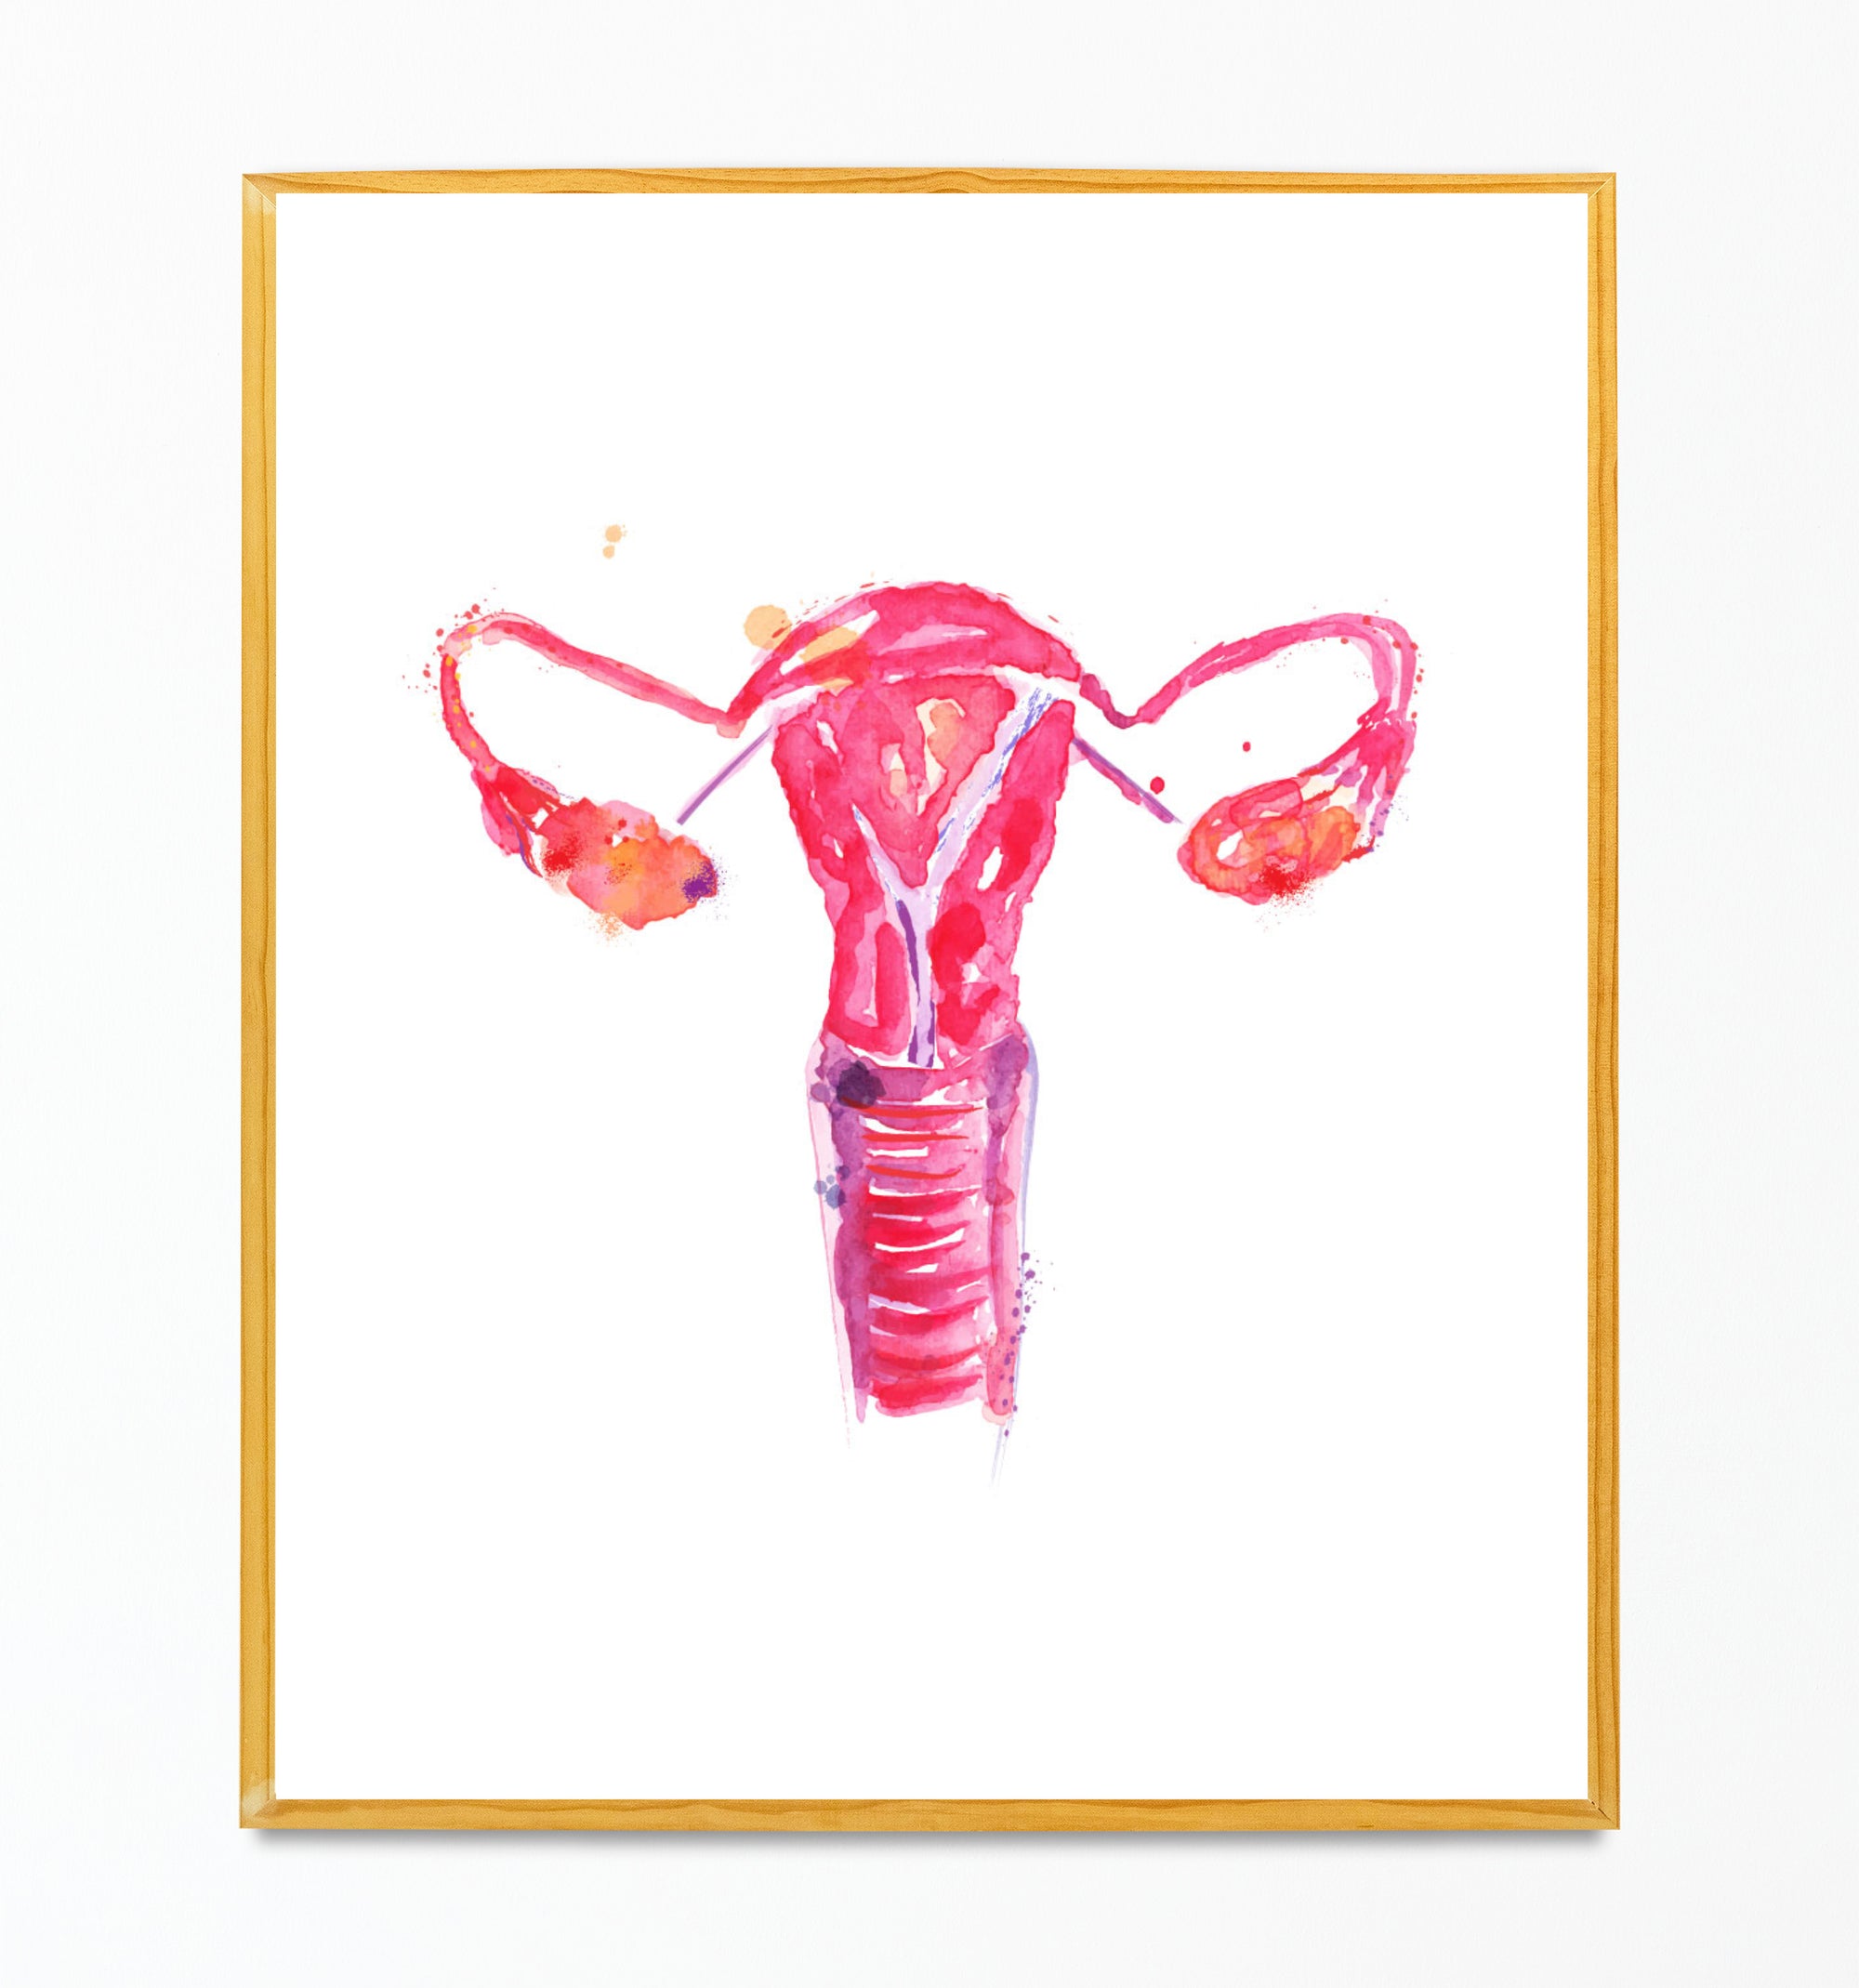 Uterus Anatomy Art Print, OBGYN Office Artwork, Gynecology Midwife Gift